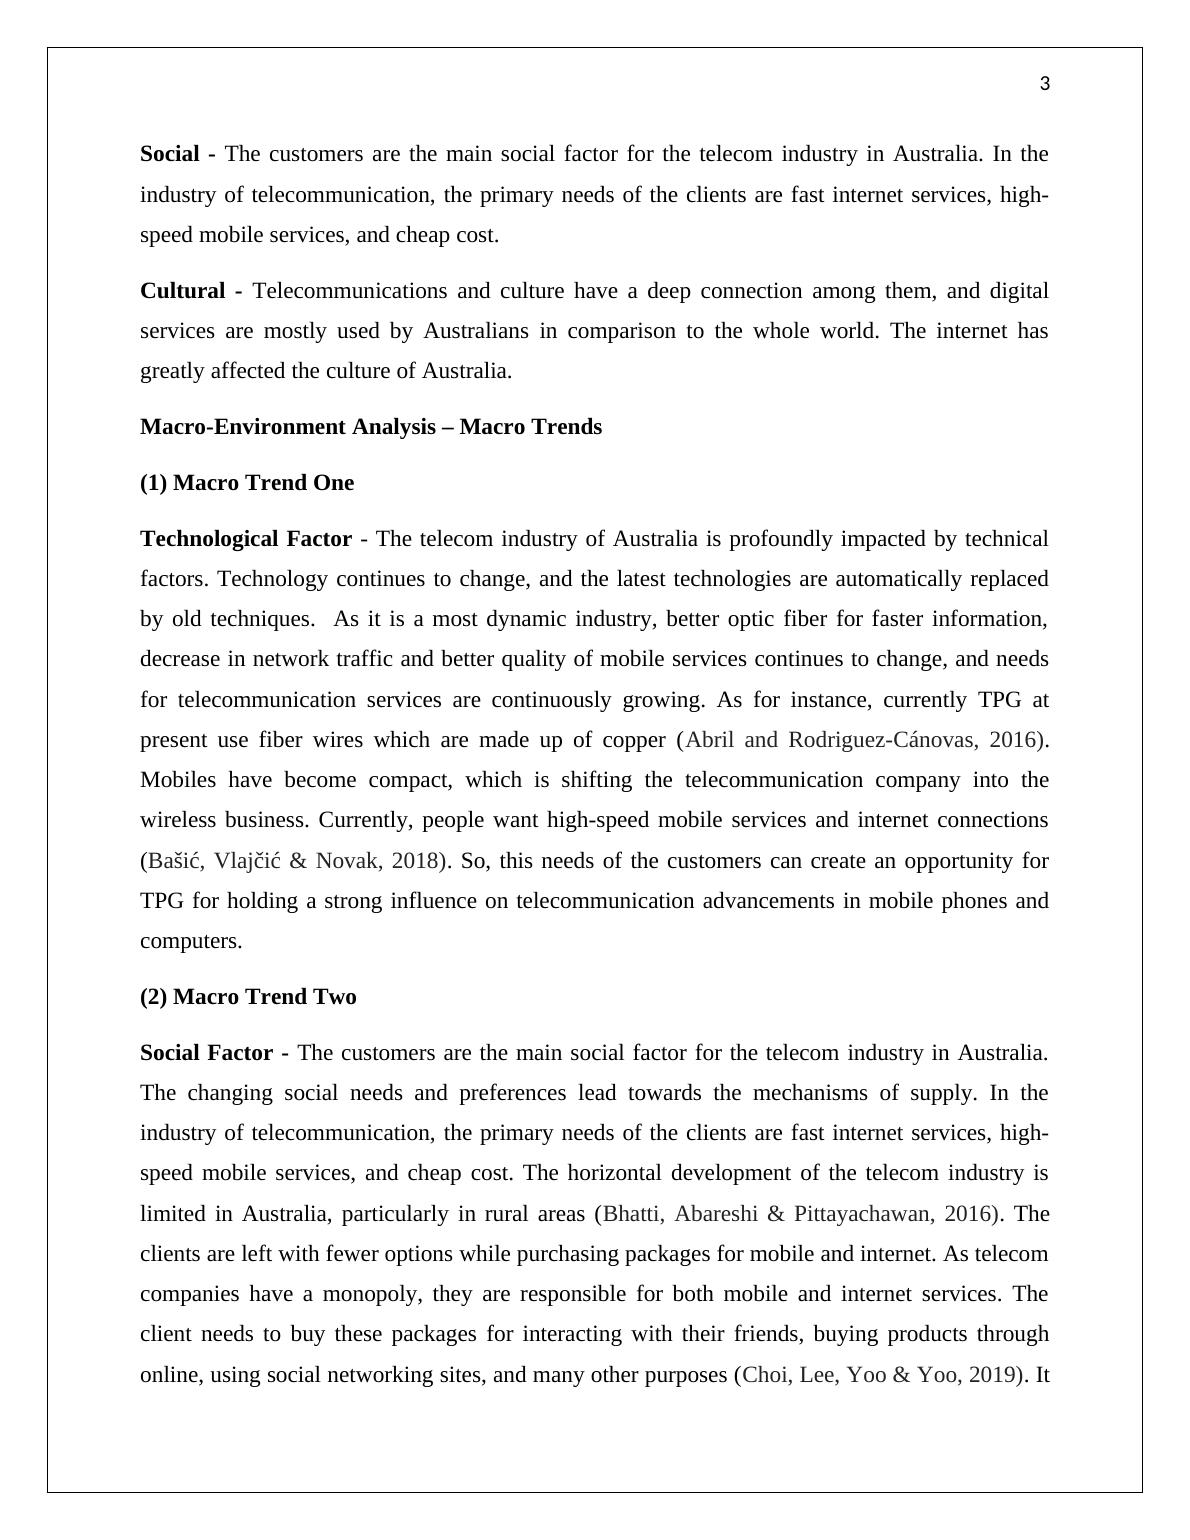 Marketing Management Analysis of TPG Telecom Pty. Ltd_4